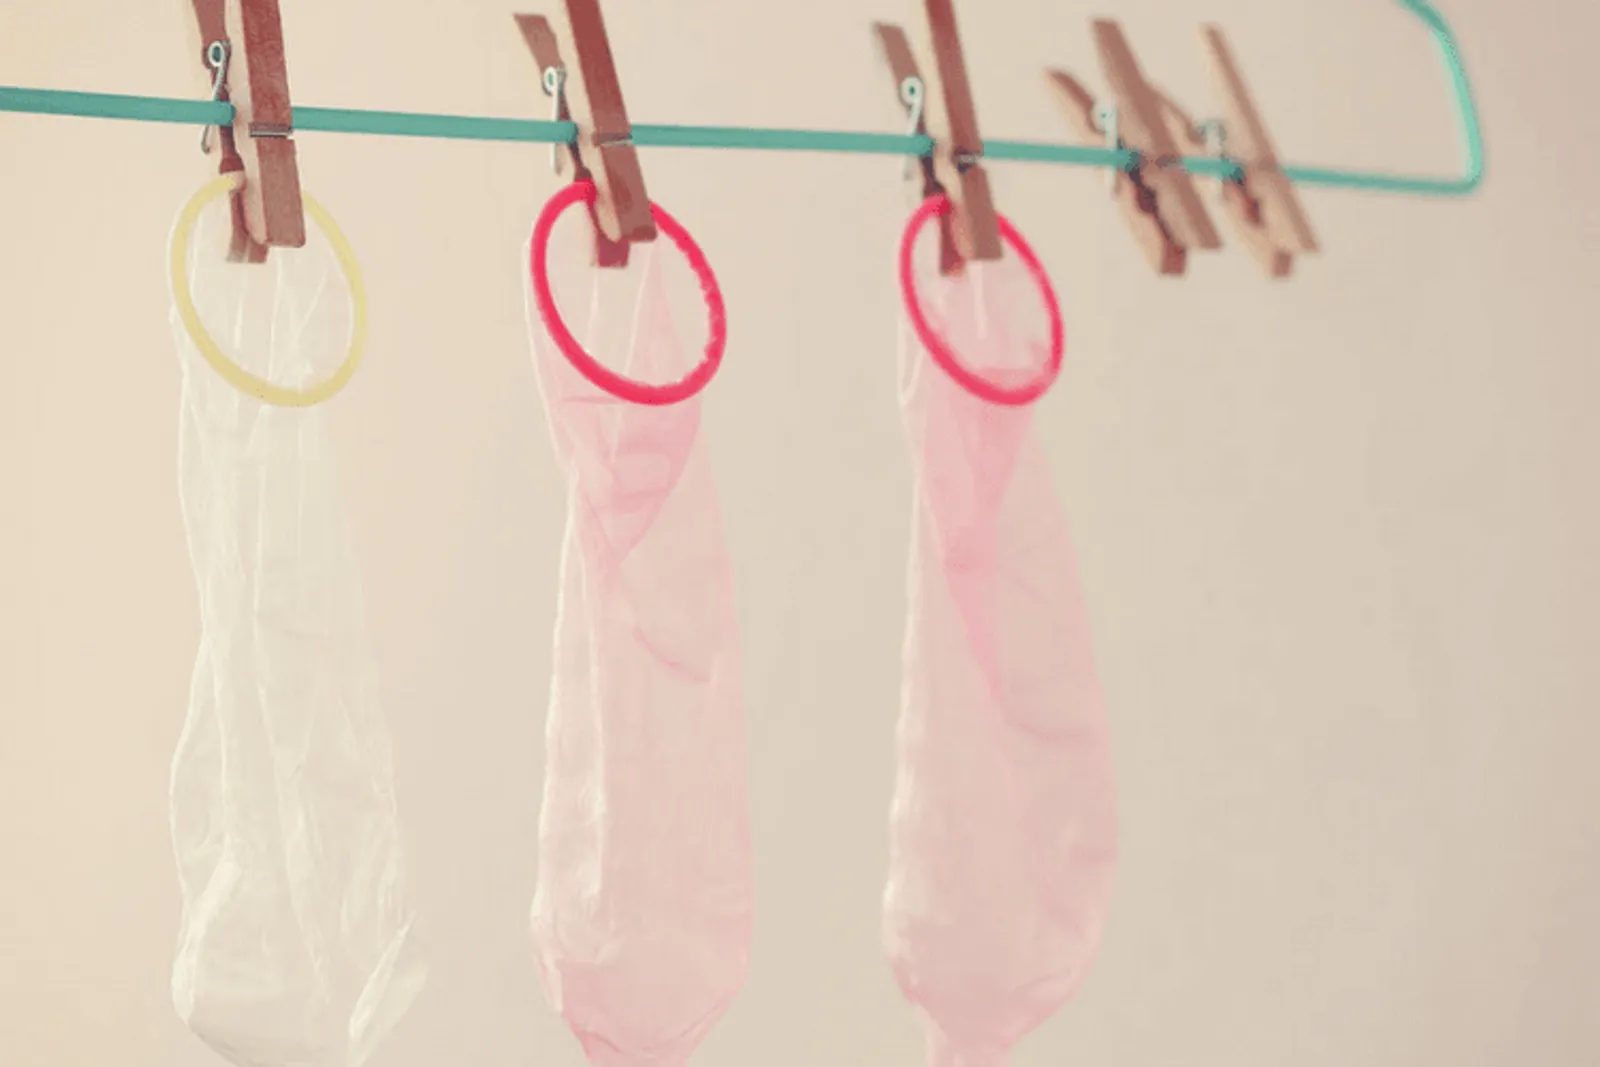 Ketahui Ukuran Kondom dan Cara Memilih yang Pas